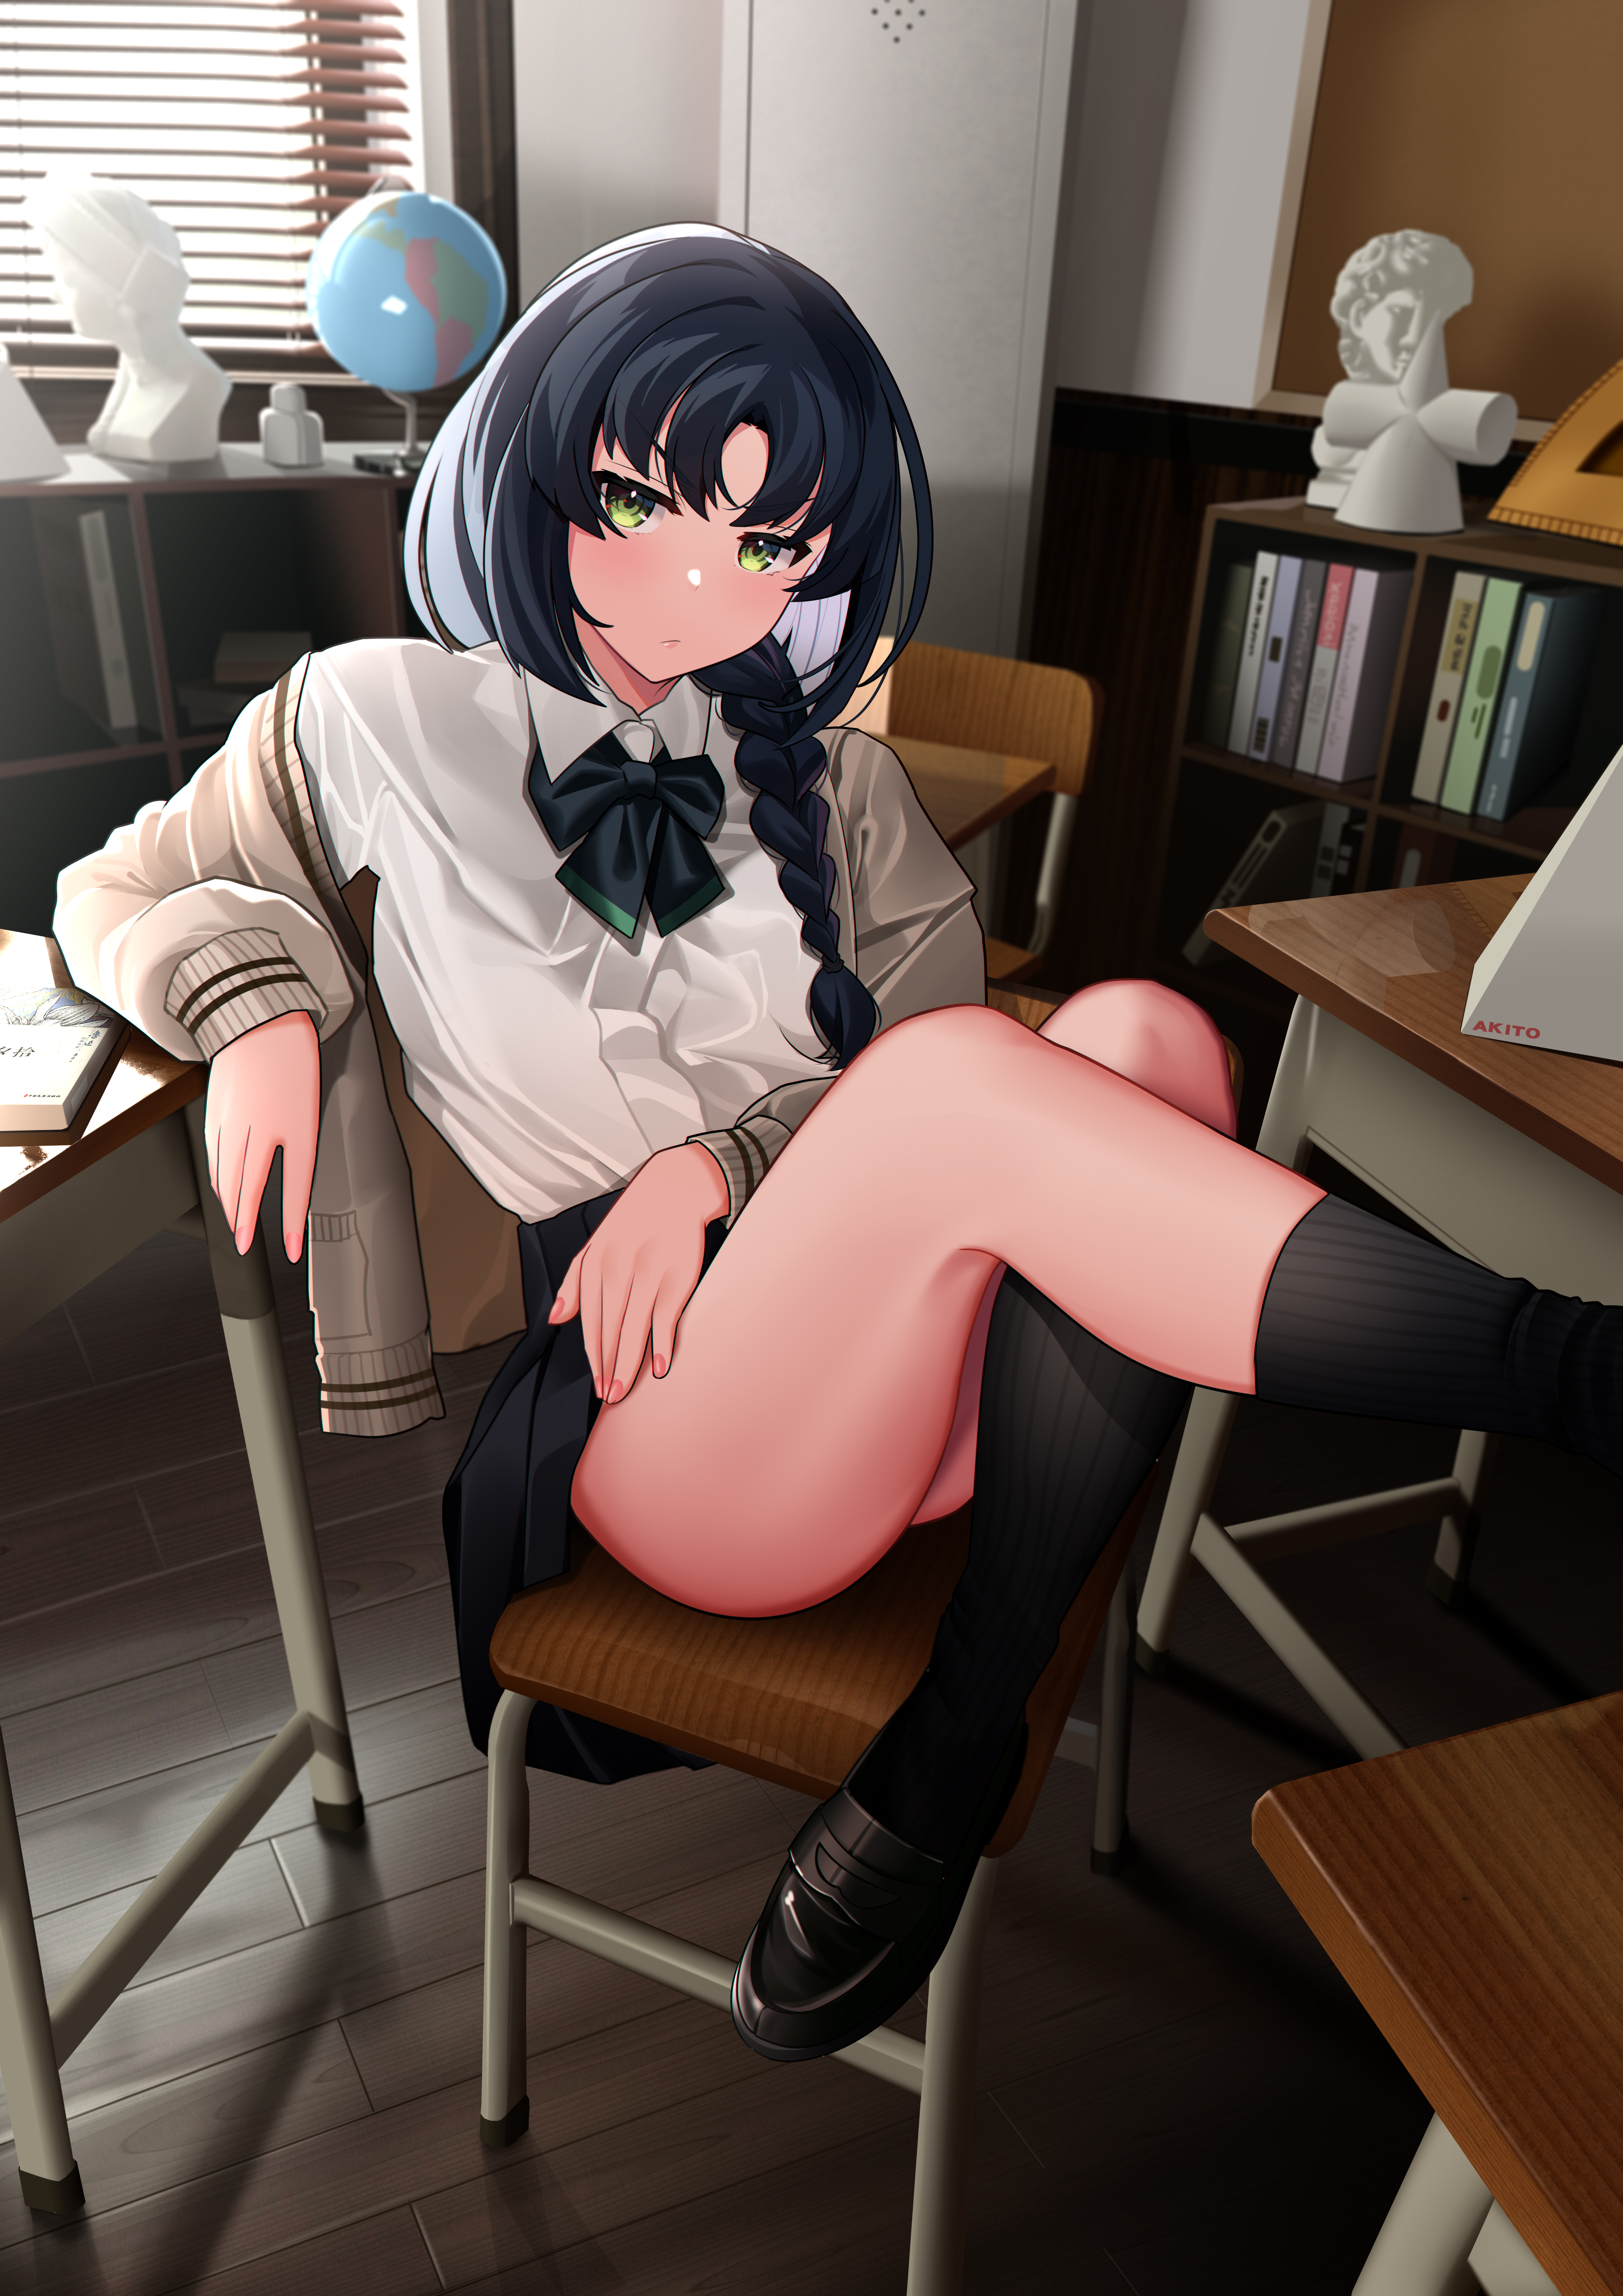 Anime 3307x4677 anime girls green eyes portrait display schoolgirl school uniform chair bow tie books thighs braids Pixiv